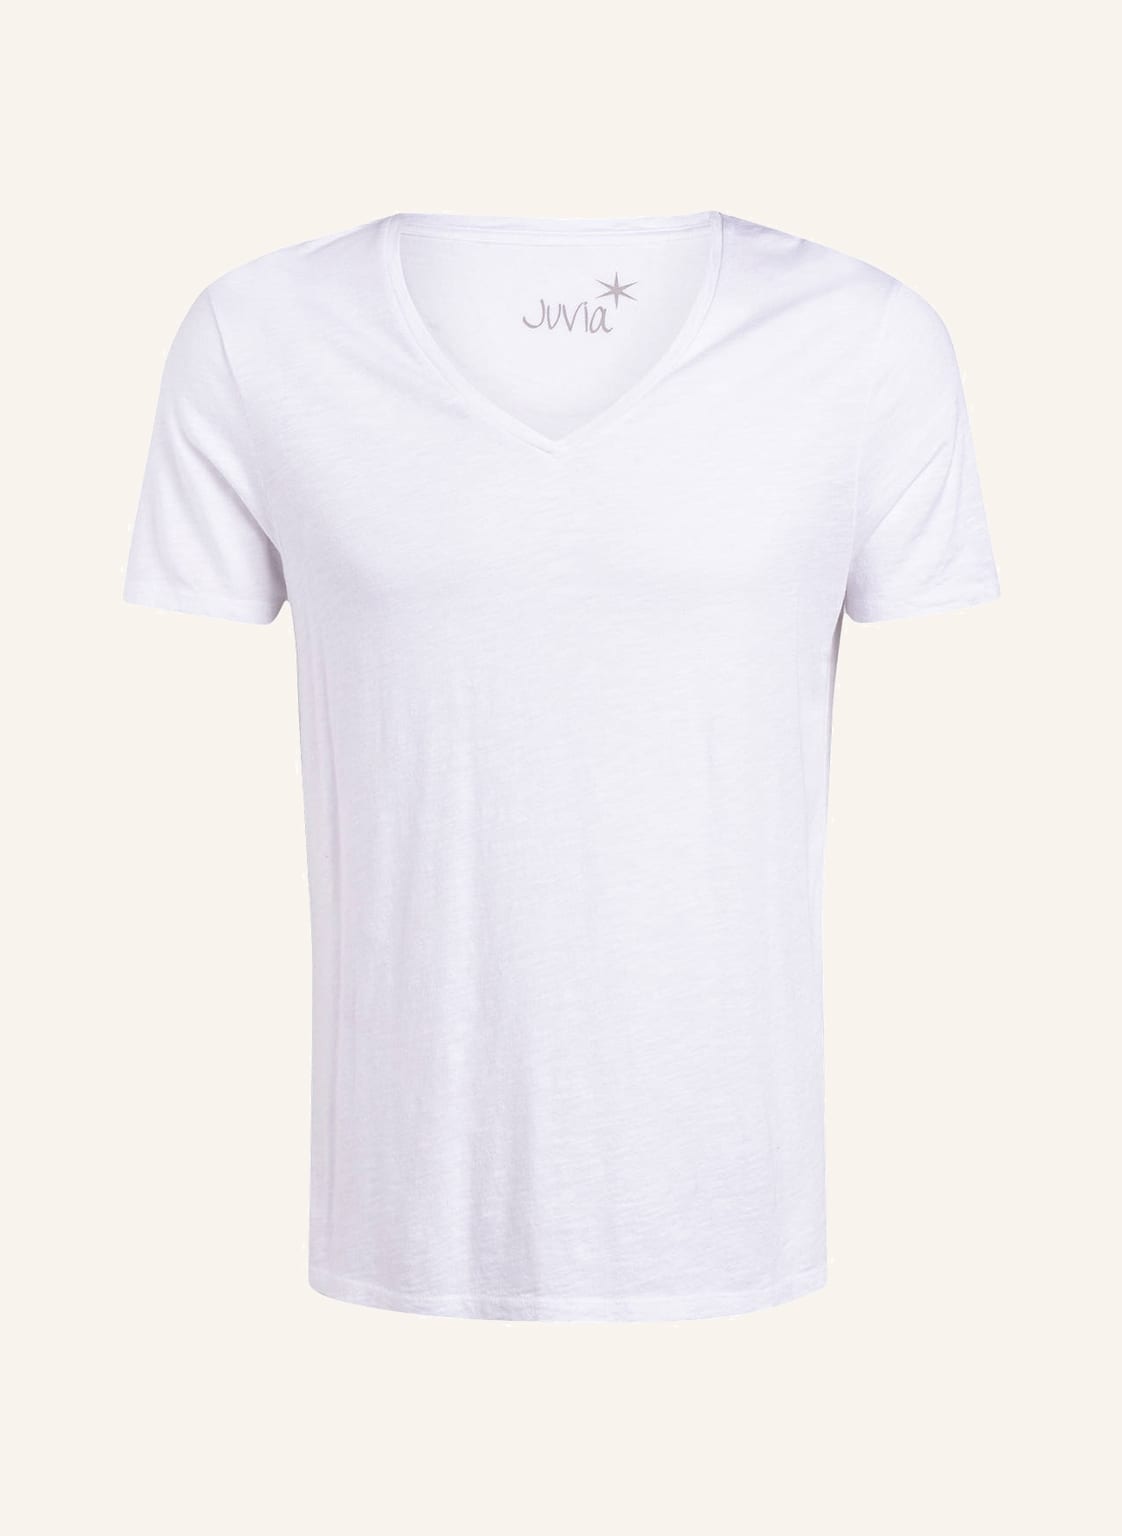 Juvia T-Shirt weiss von Juvia